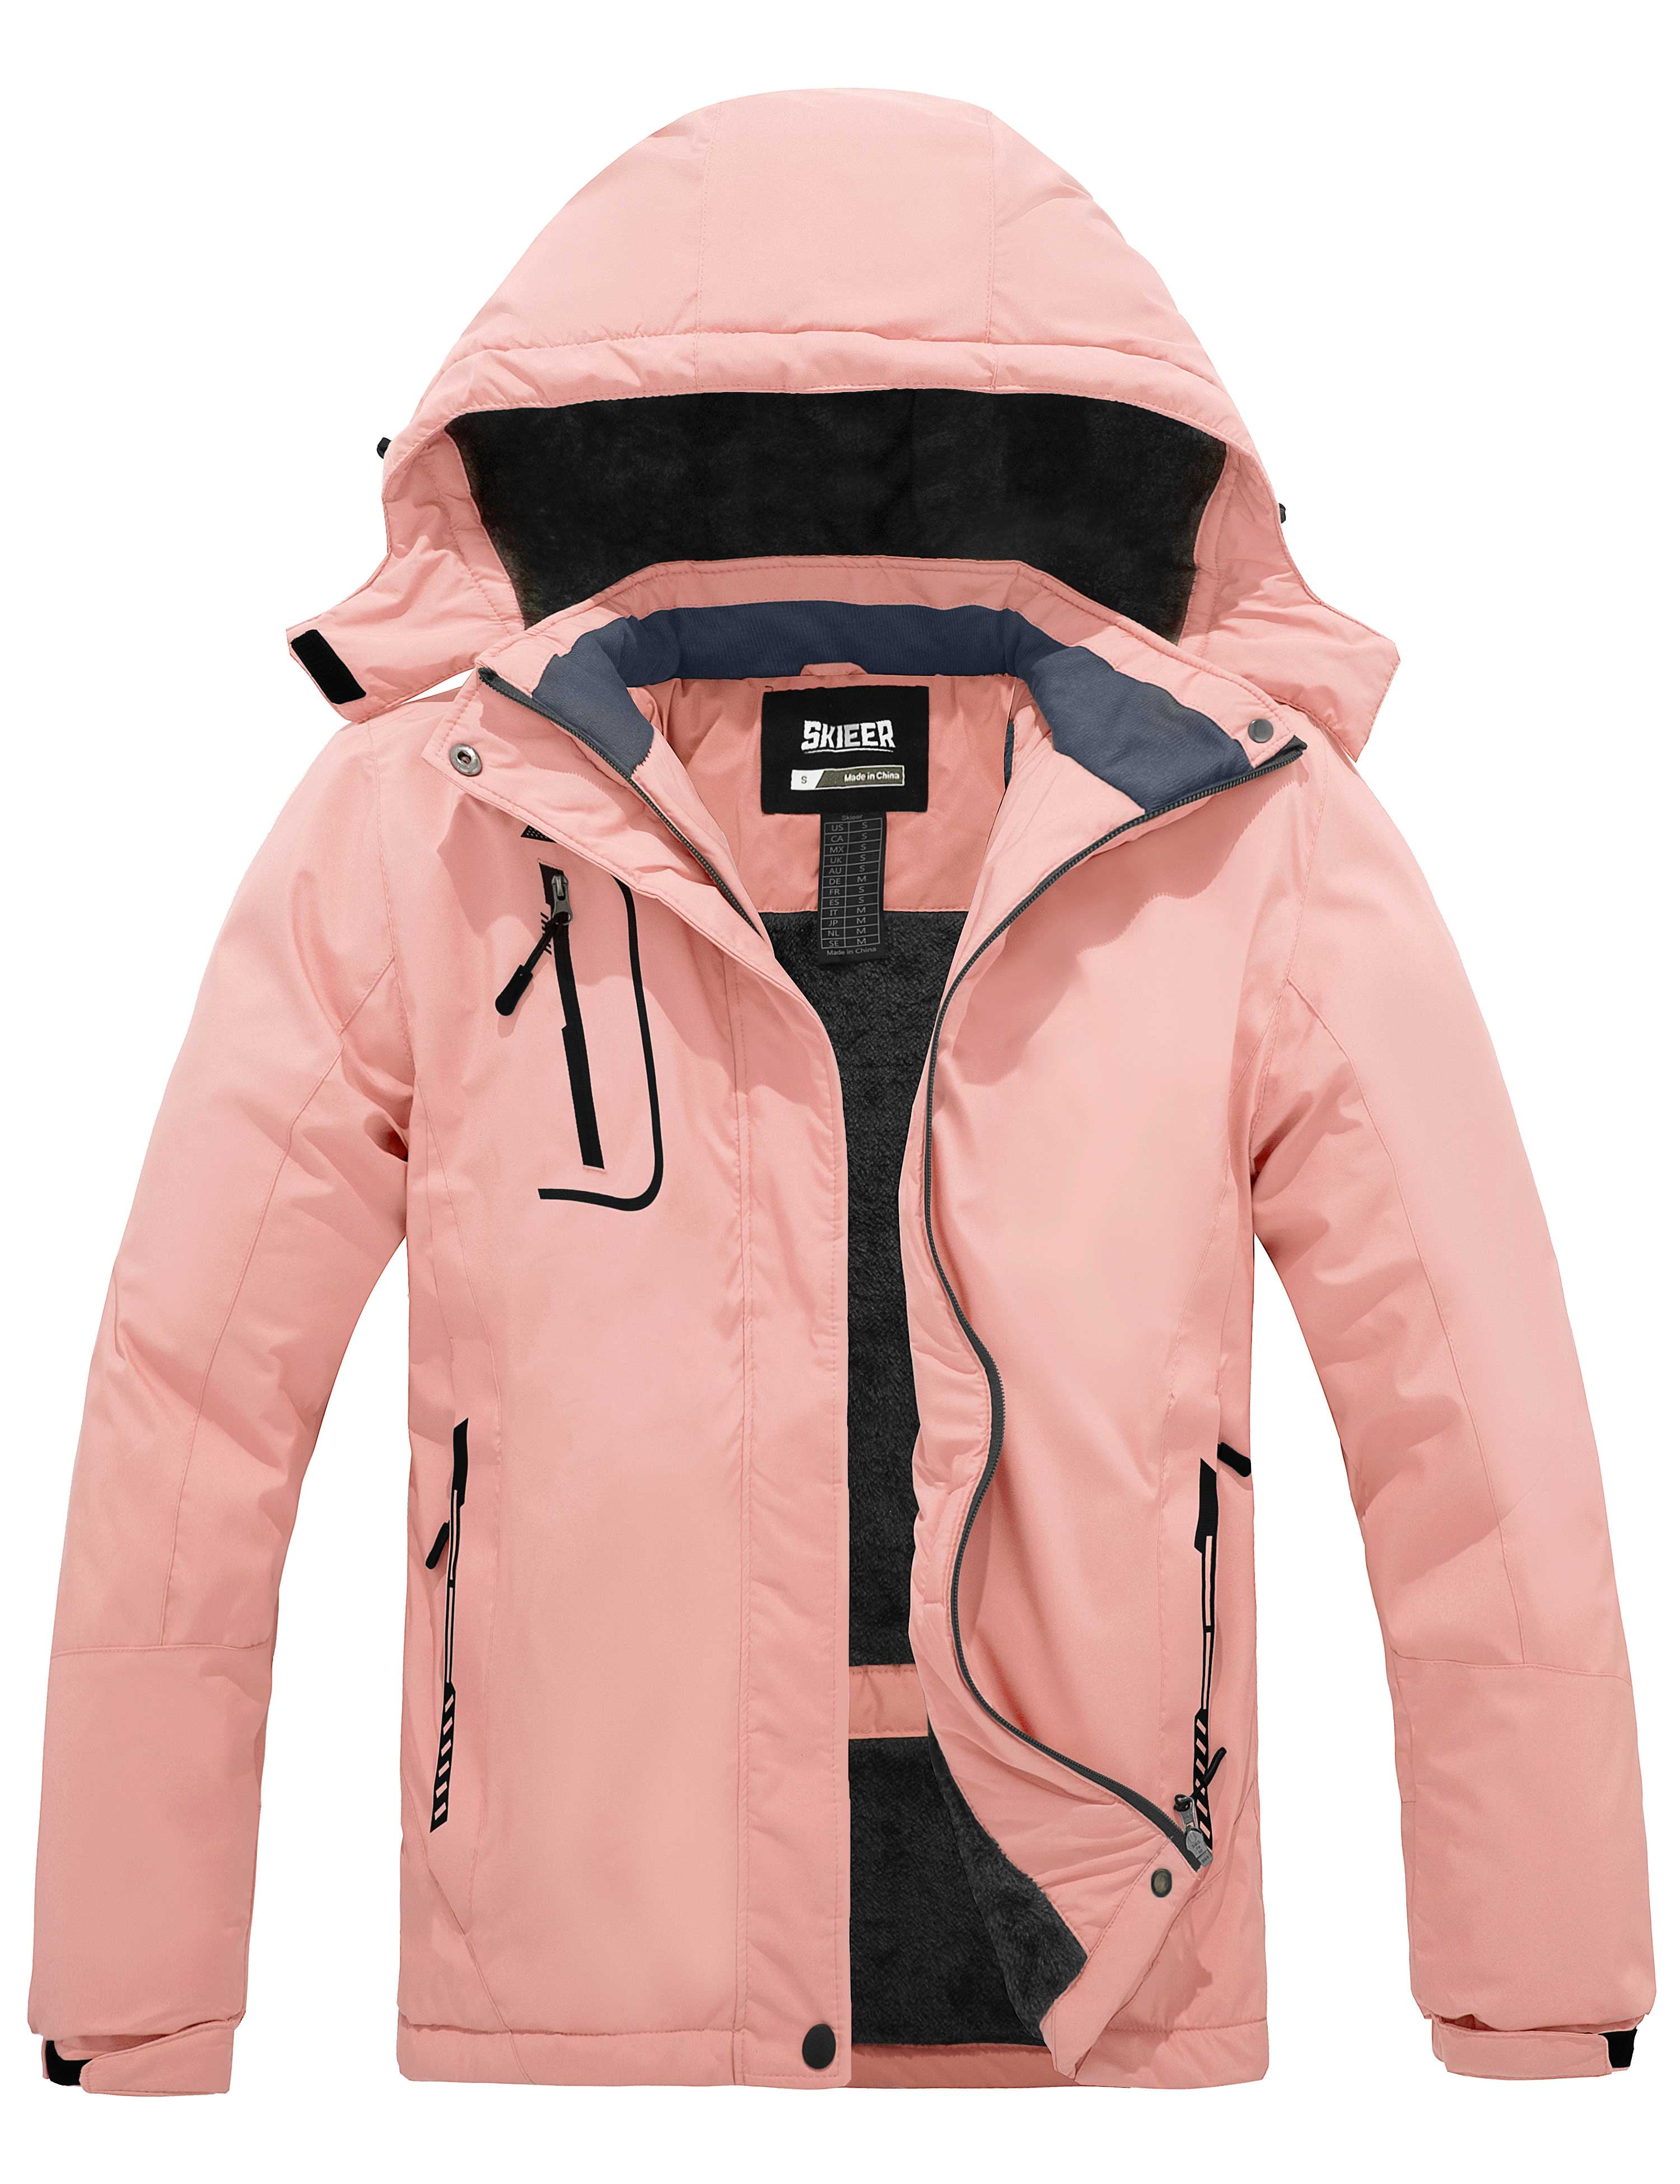 Pursky Boy's Waterproof Ski Jacket Kids Winter Snow Coats Fleece Raincoats Parka 